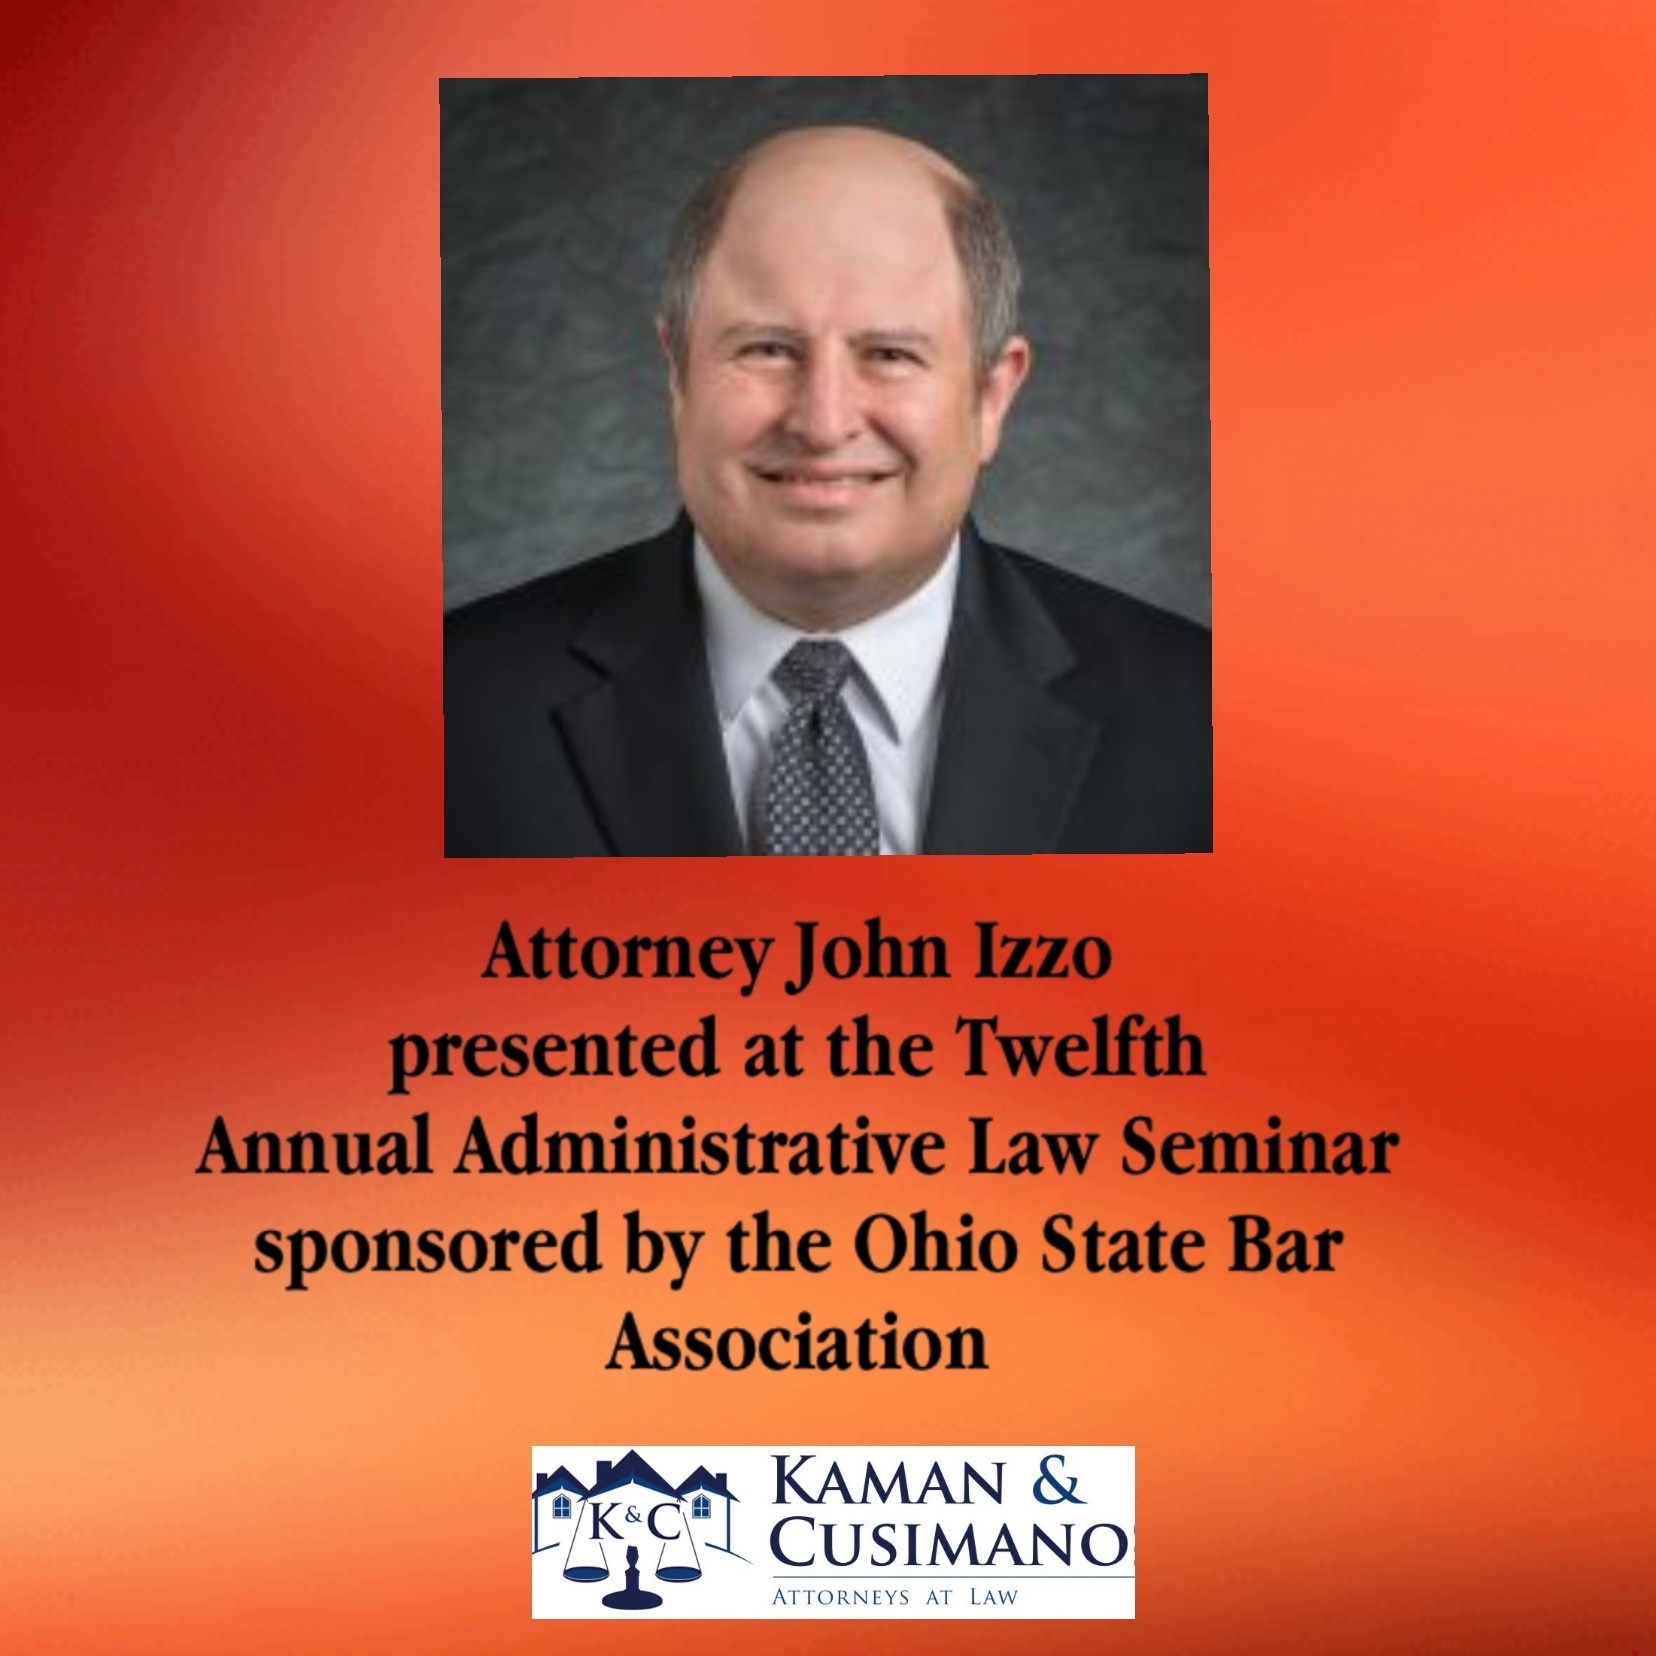 Attorney John Izzo presented at the Twelfth Annual Administrative Law Seminar